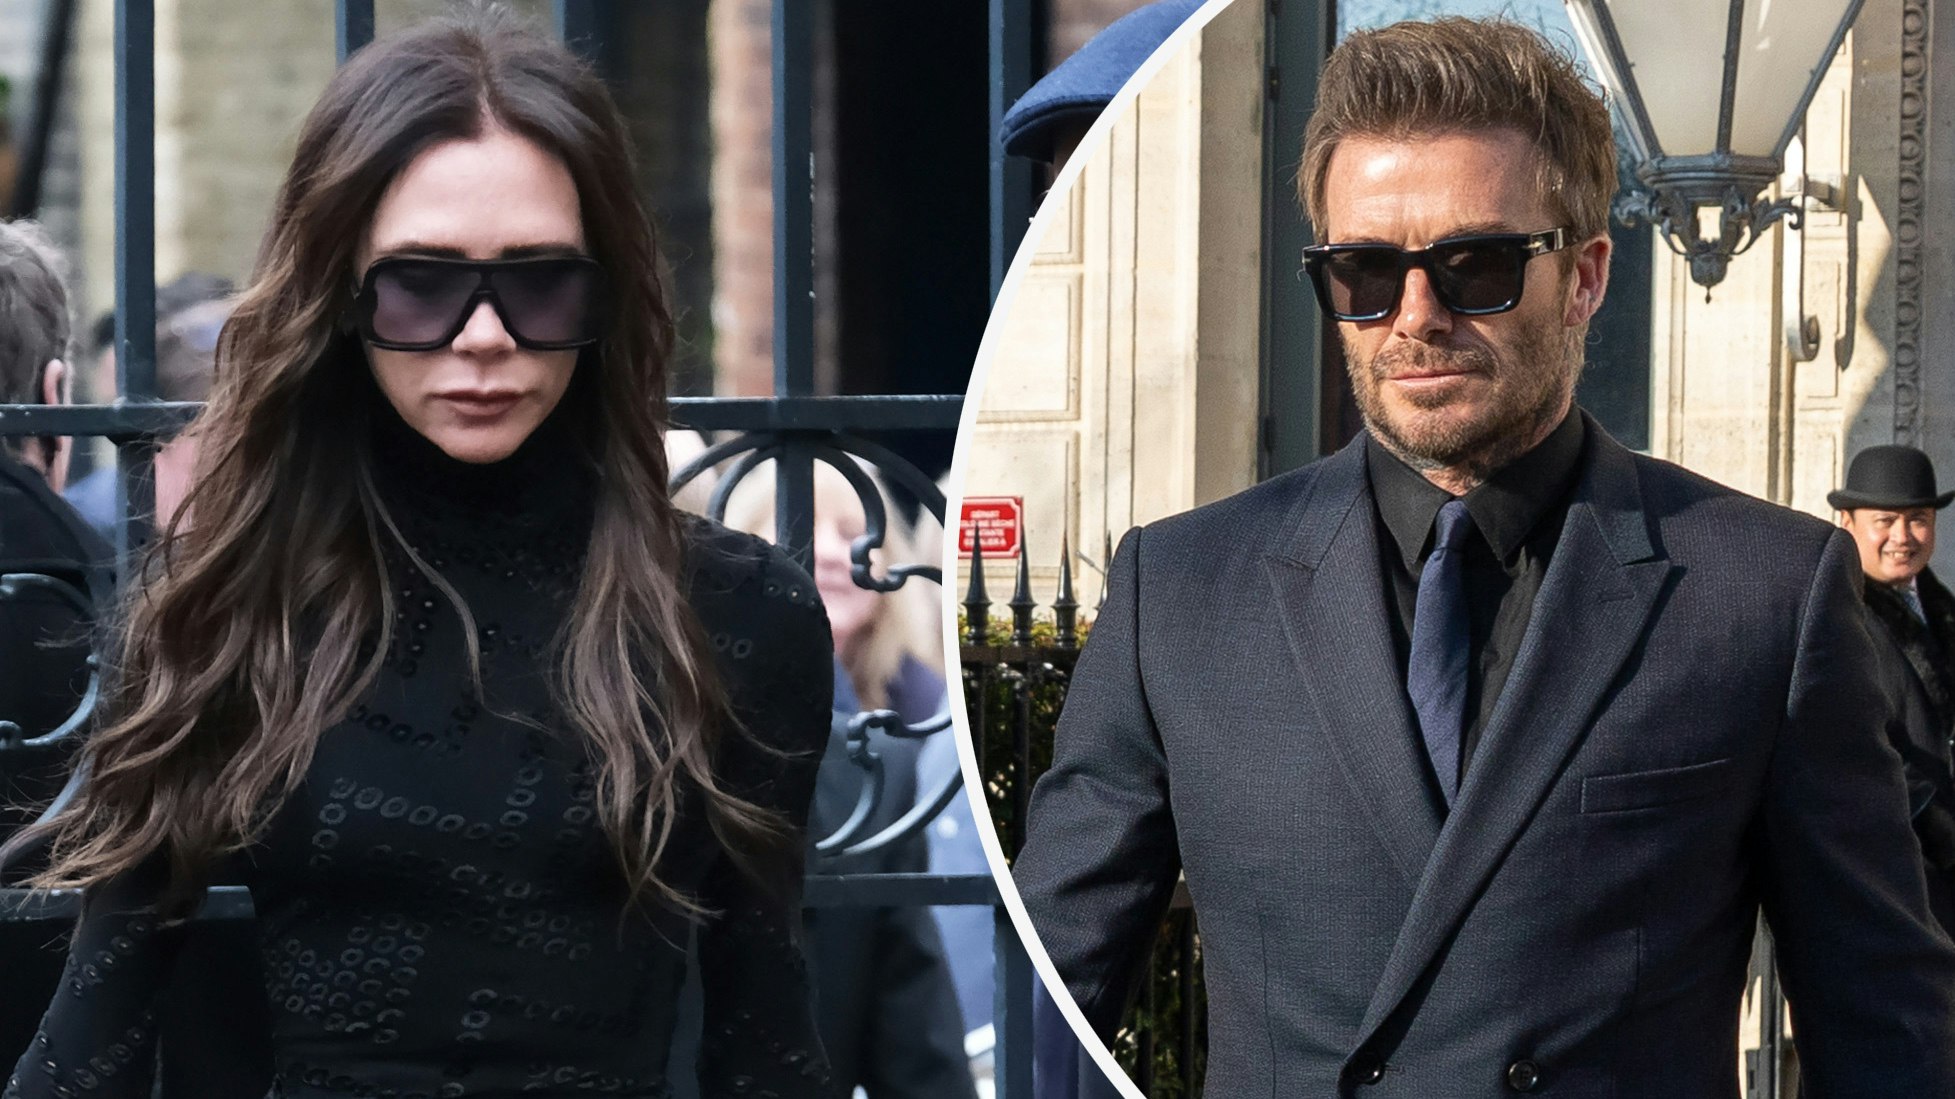 Victoria Beckham and David Beckham Make a Stylish Couple at London